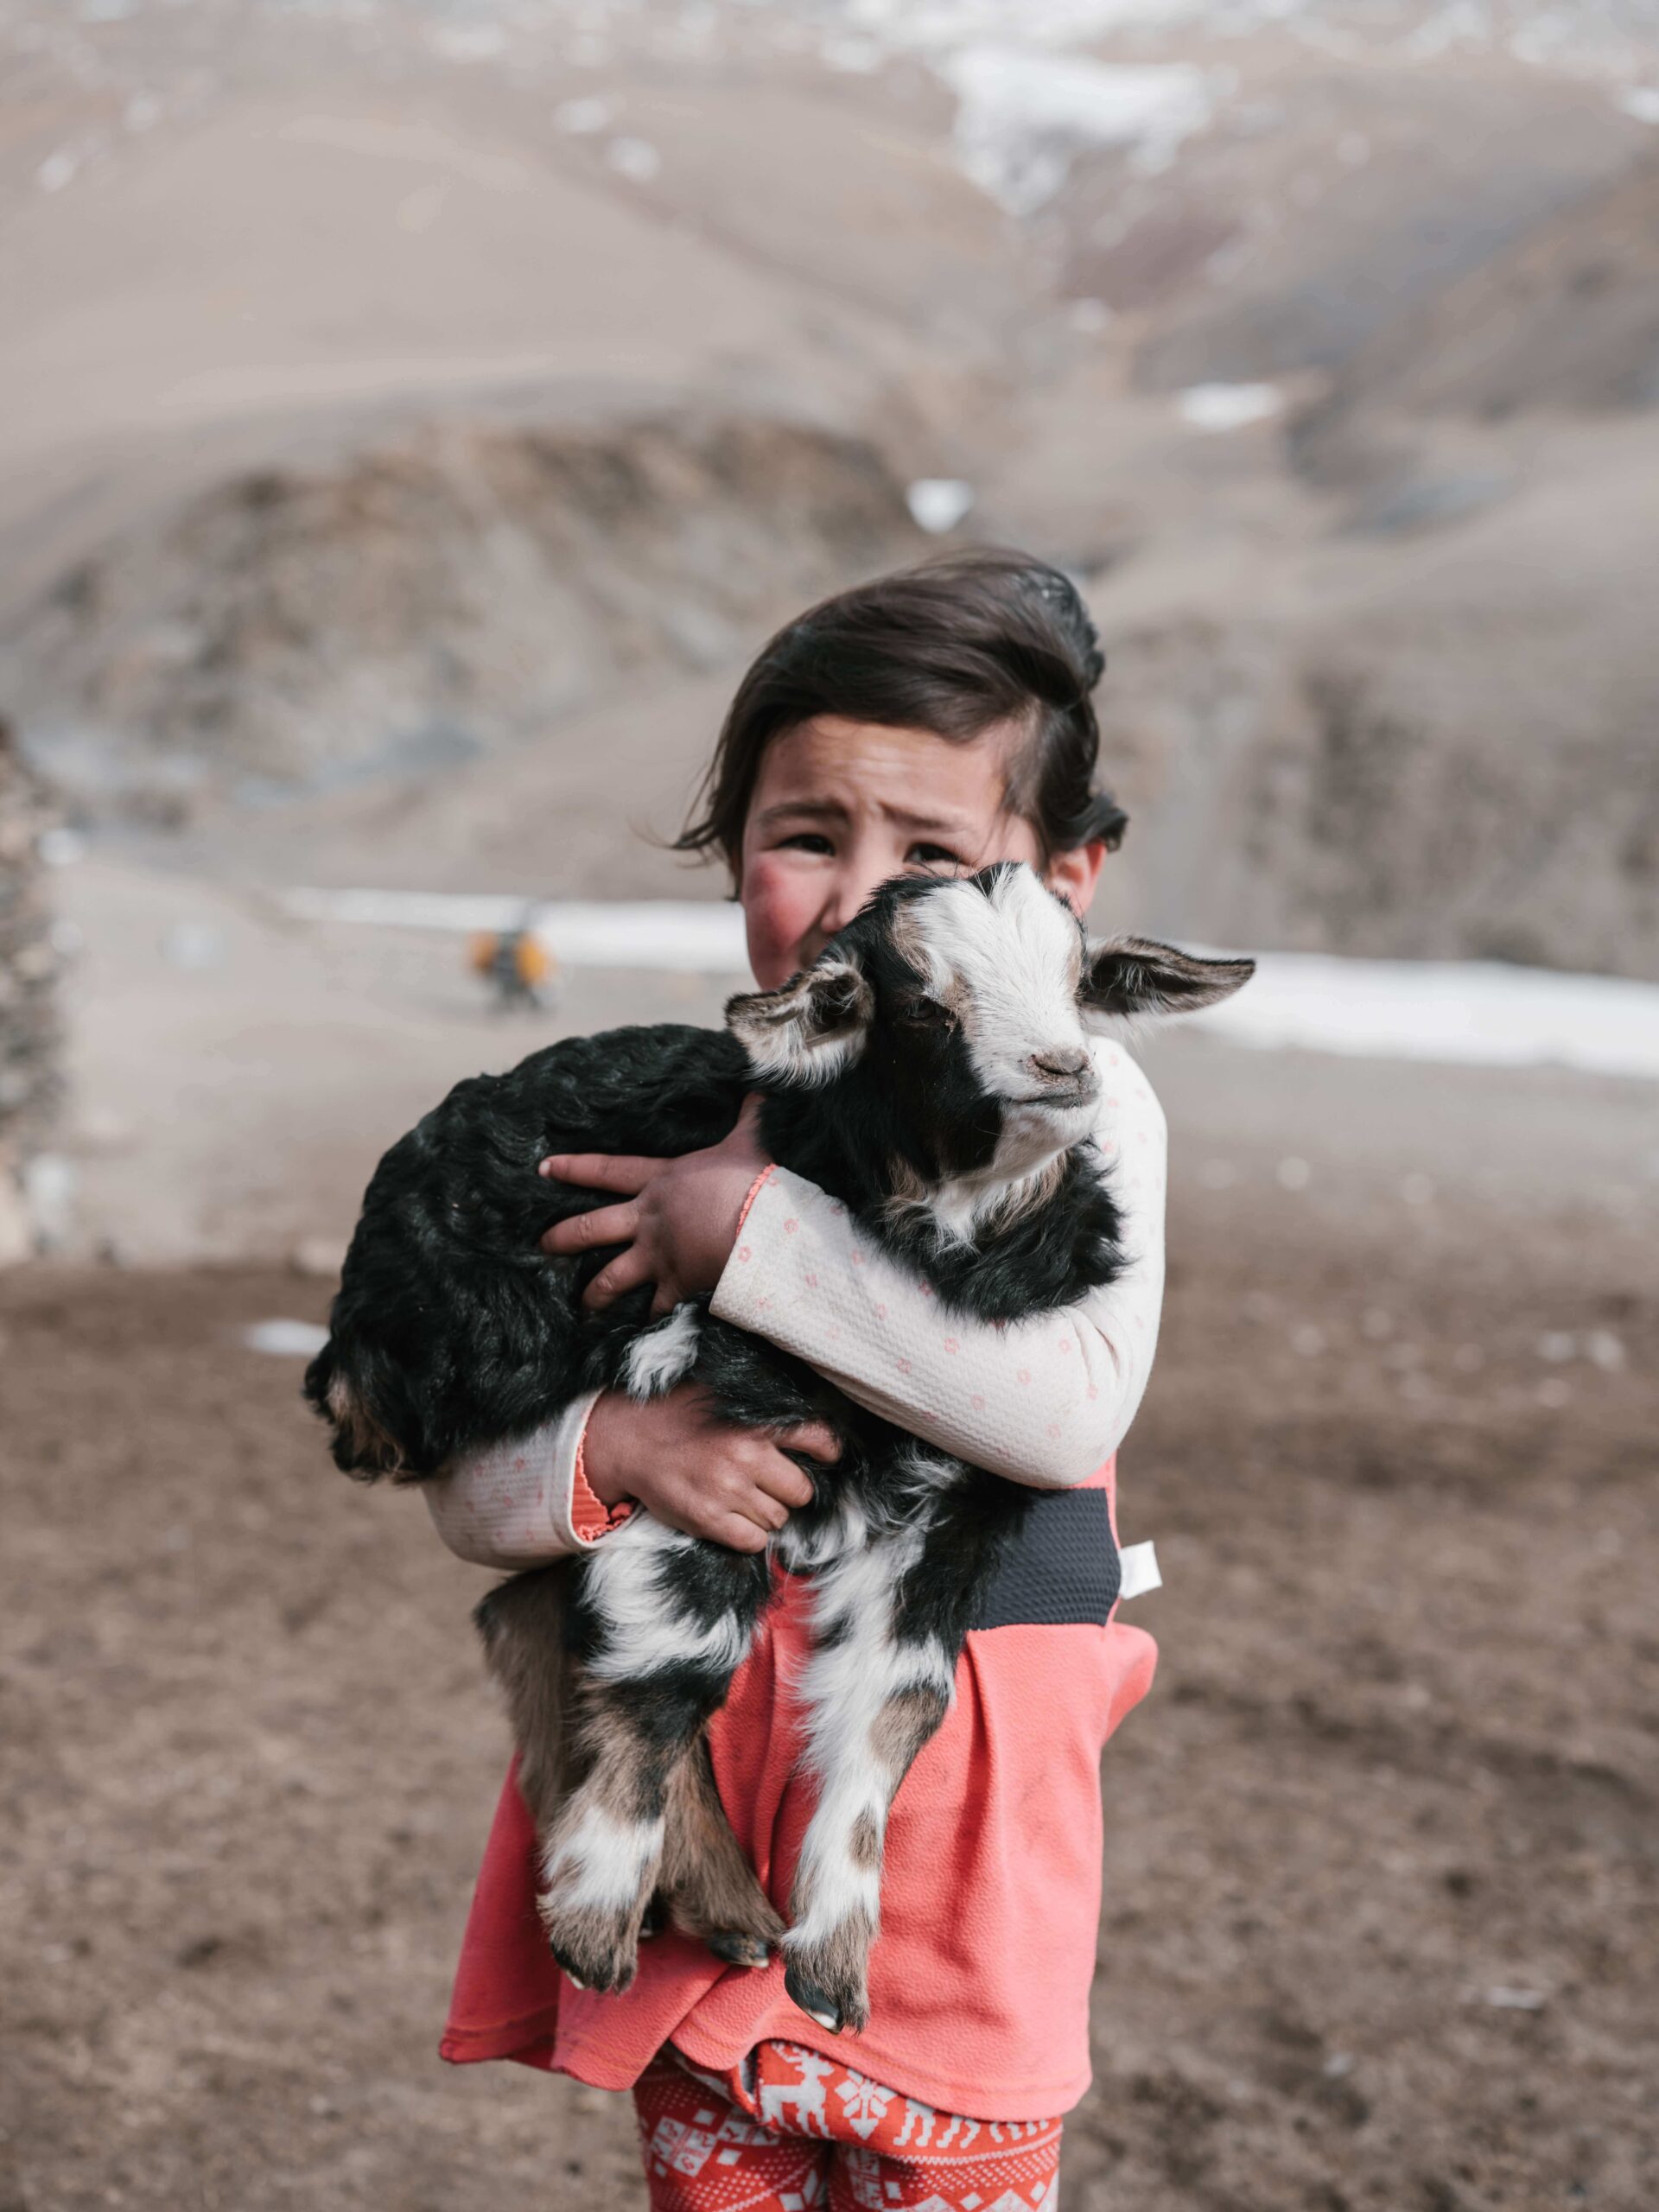 Little girl holding a baby goat